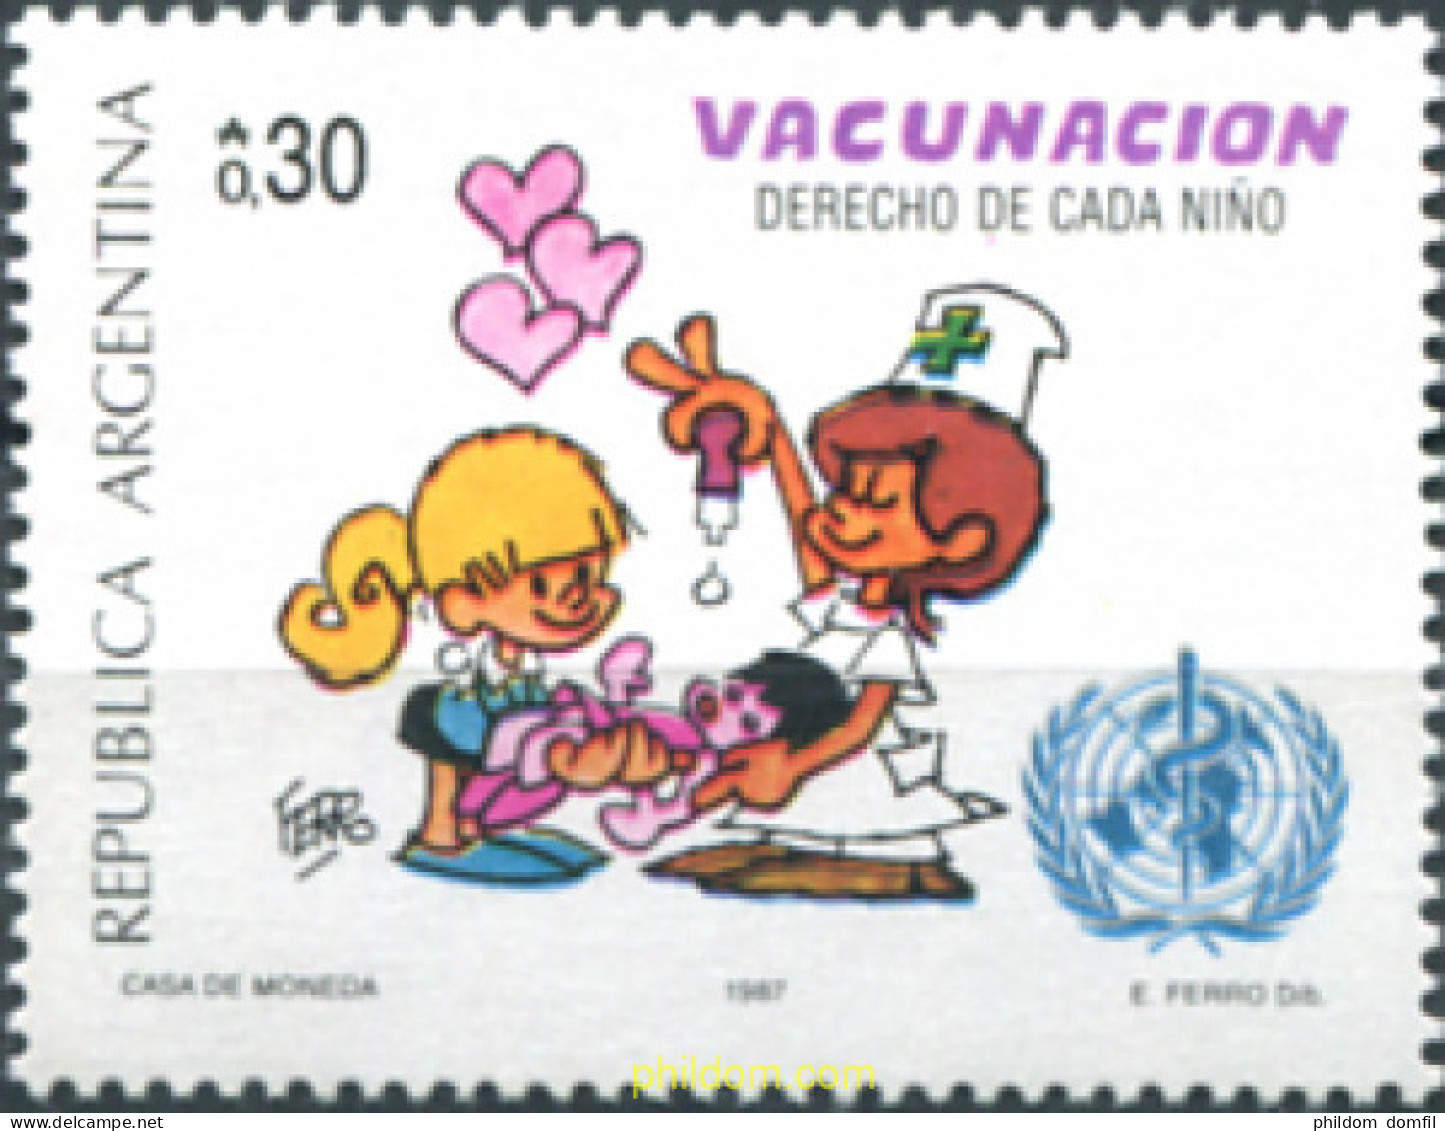 283679 MNH ARGENTINA 1987 VACUNACION INFANTIL - Ungebraucht